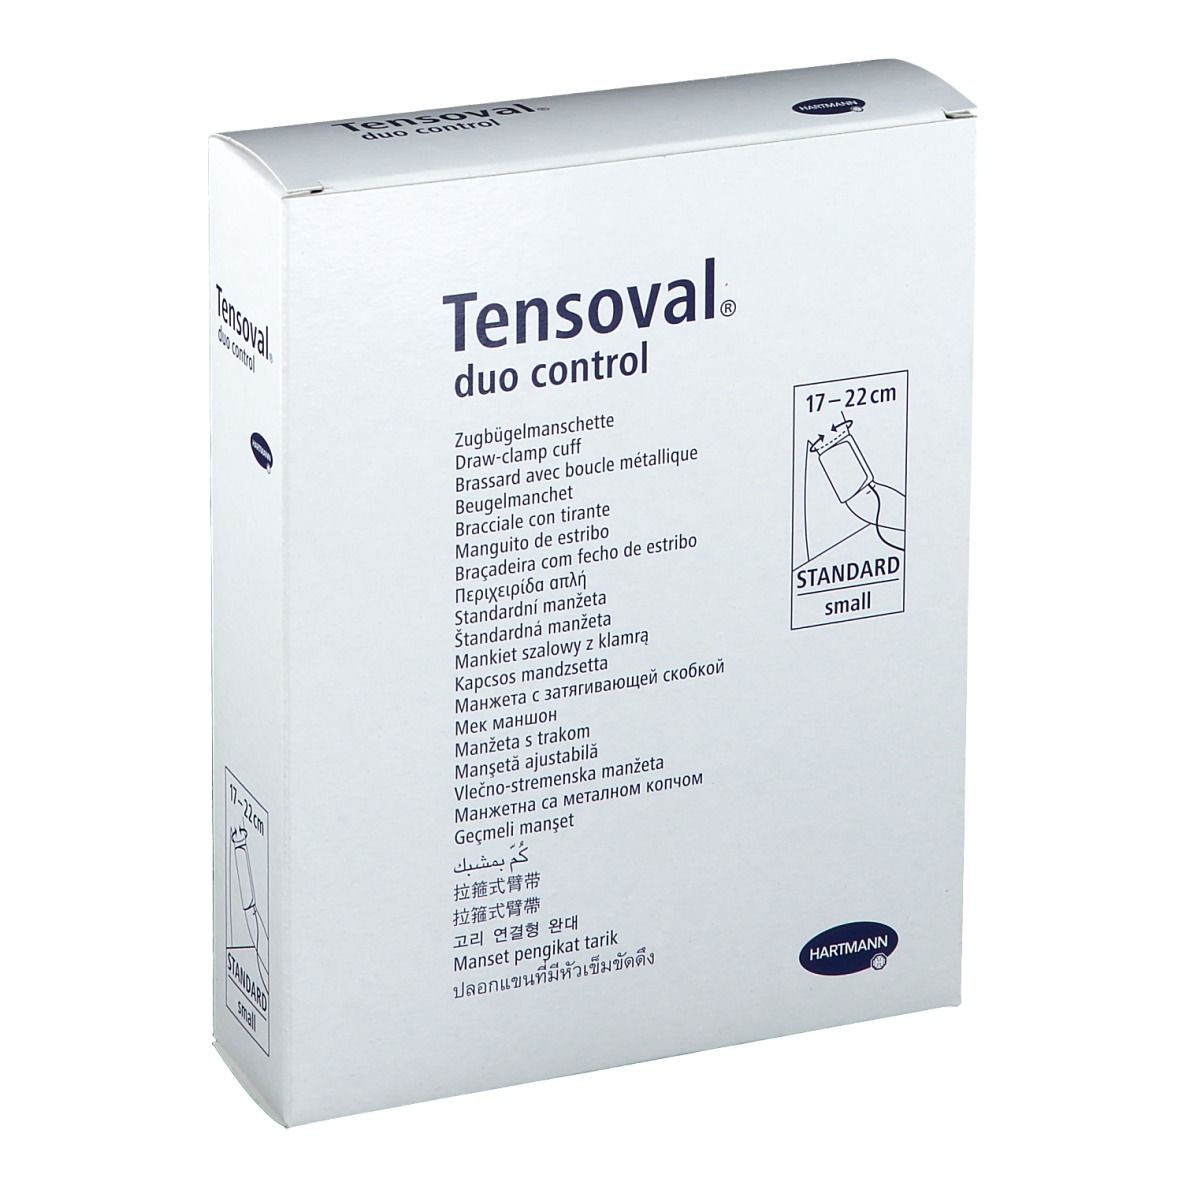 Tensoval® duo control Manschette small 17 - 22 cm